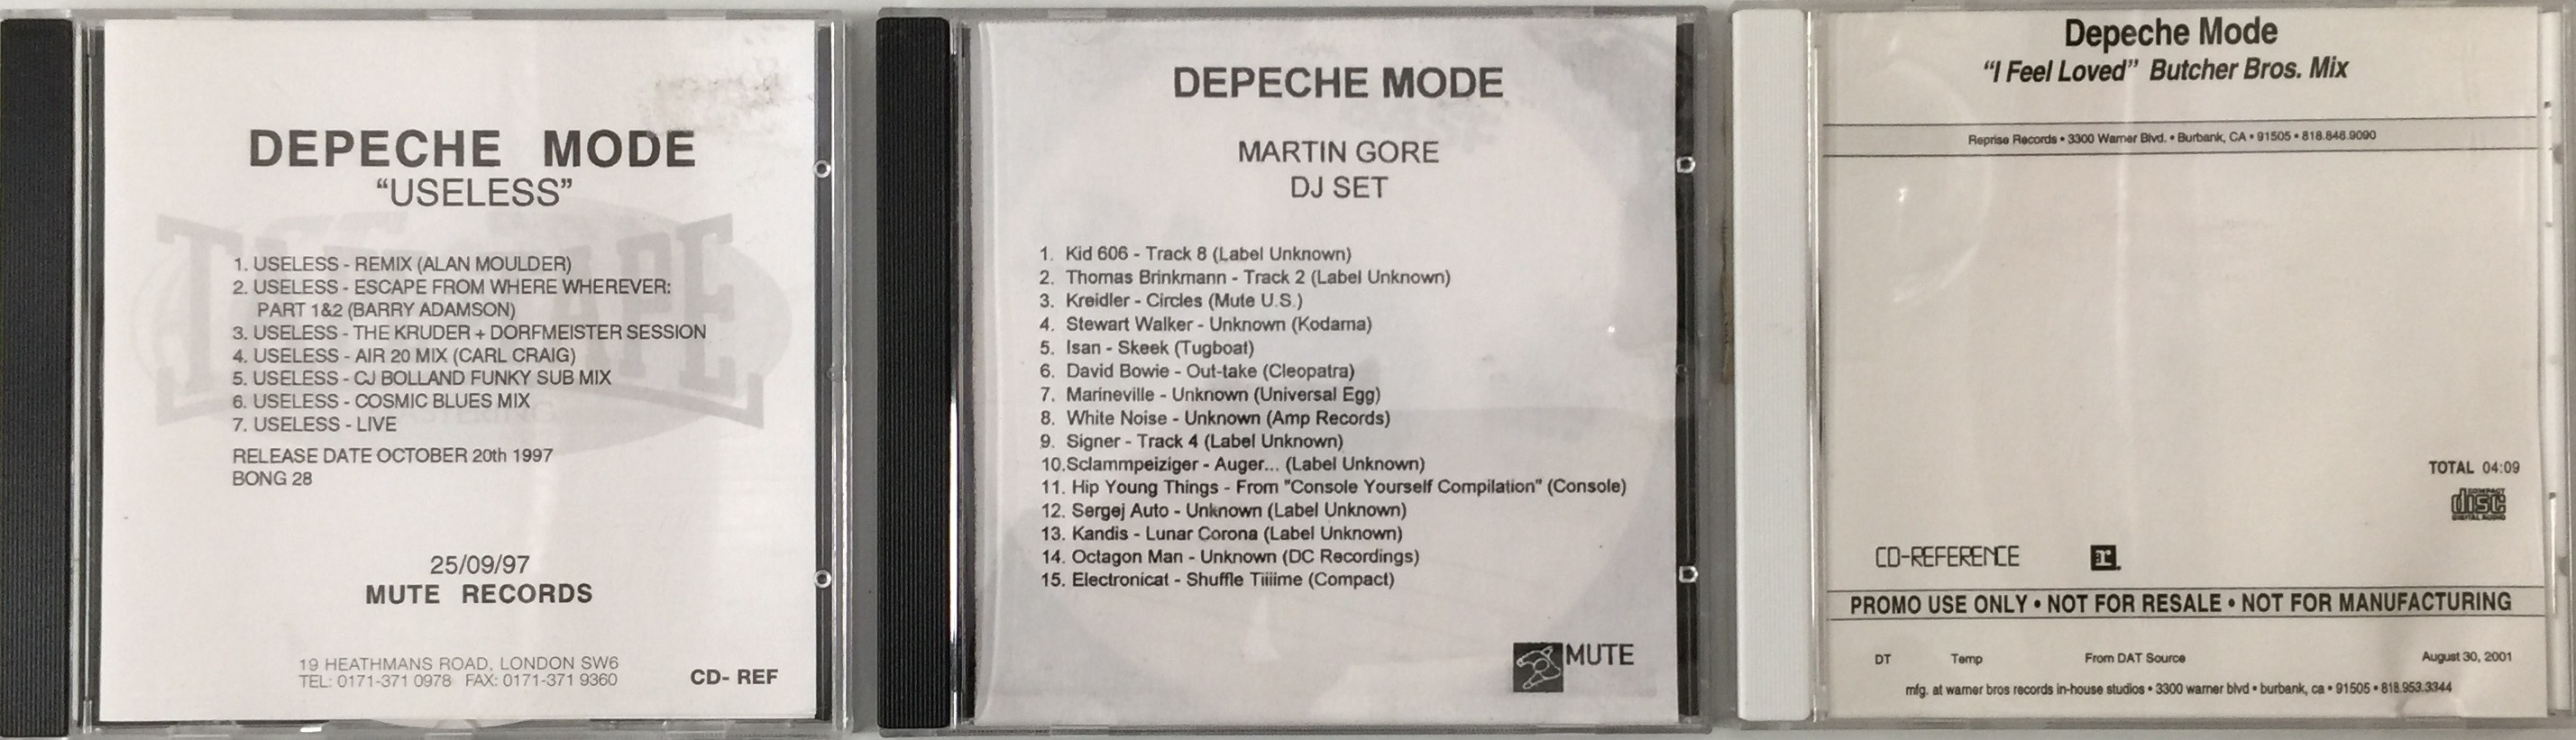 Live on air, Depeche Mode CD